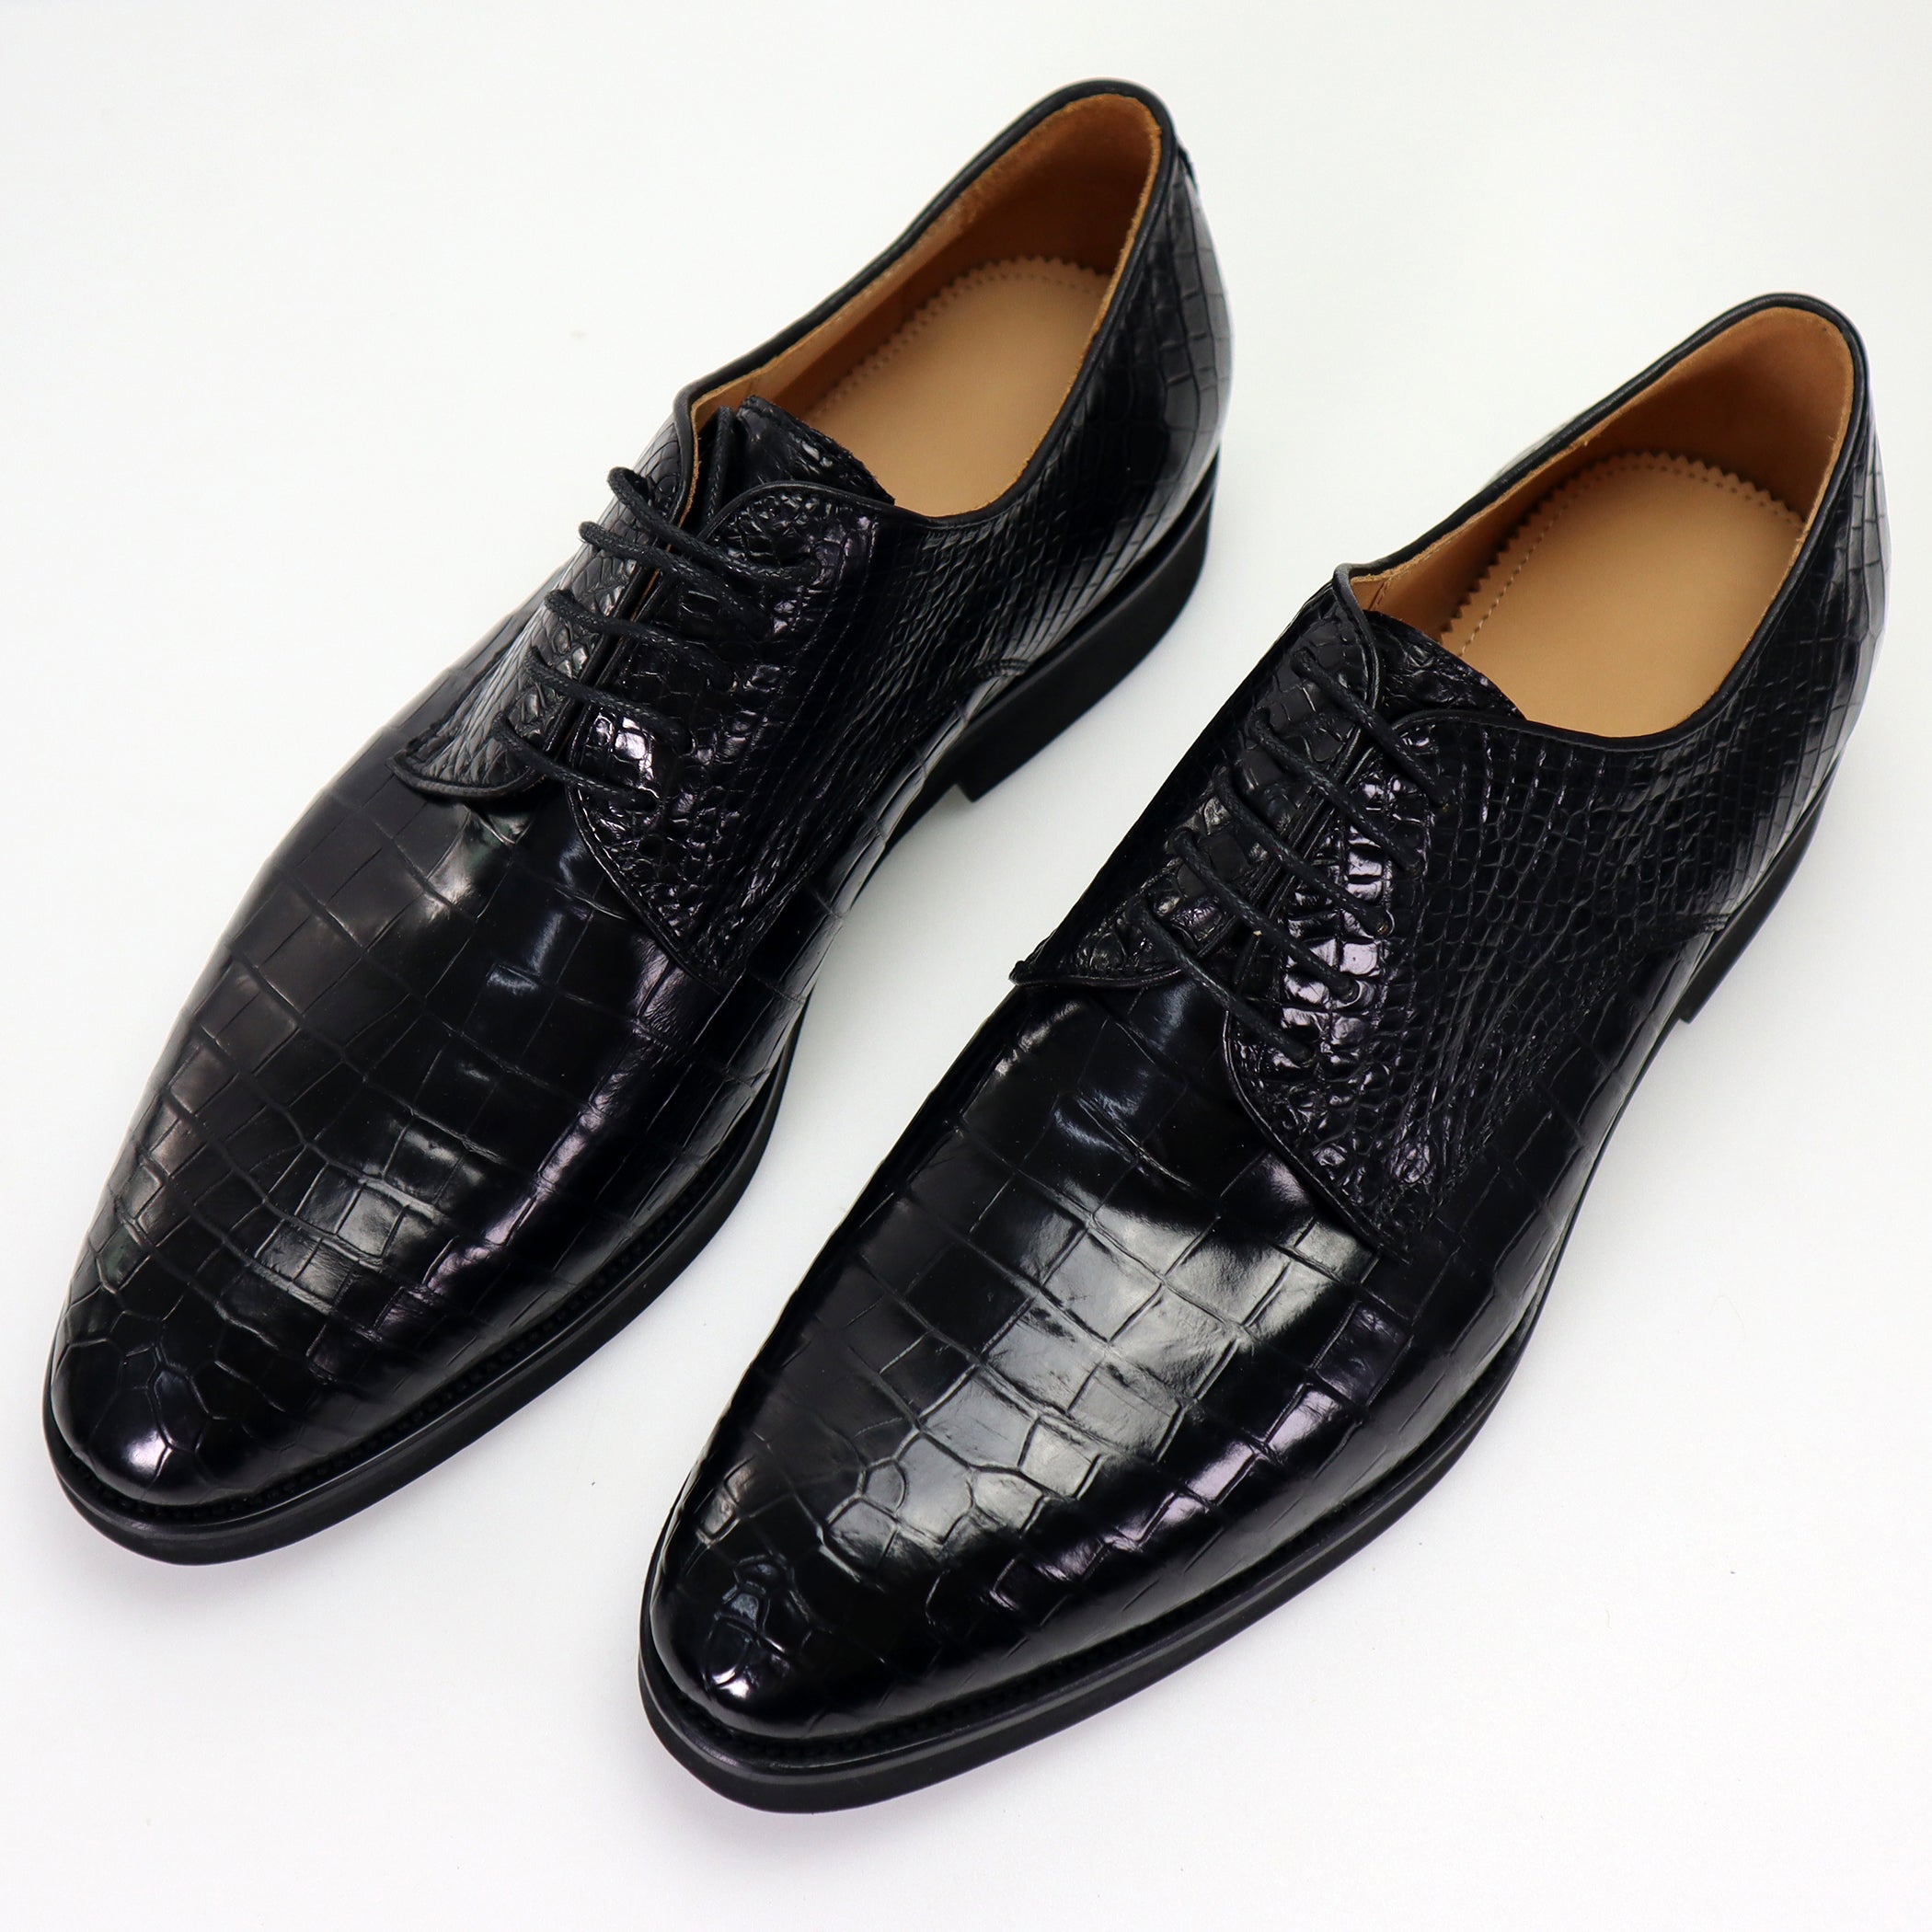 Men's Genuine Alligator Leather Derby Shoes in Goodyear Welt